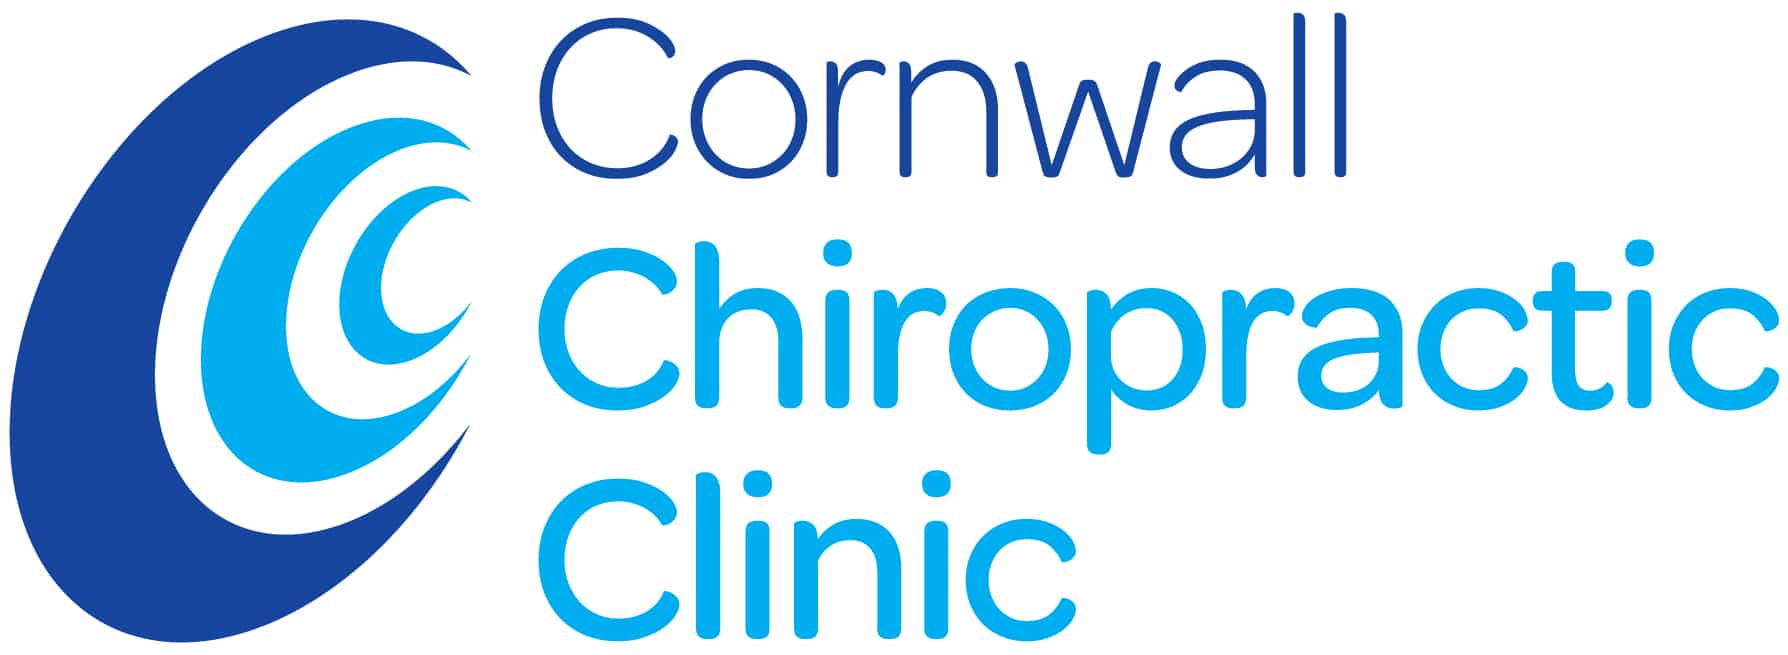 Cornwall Chiropractic Clinic